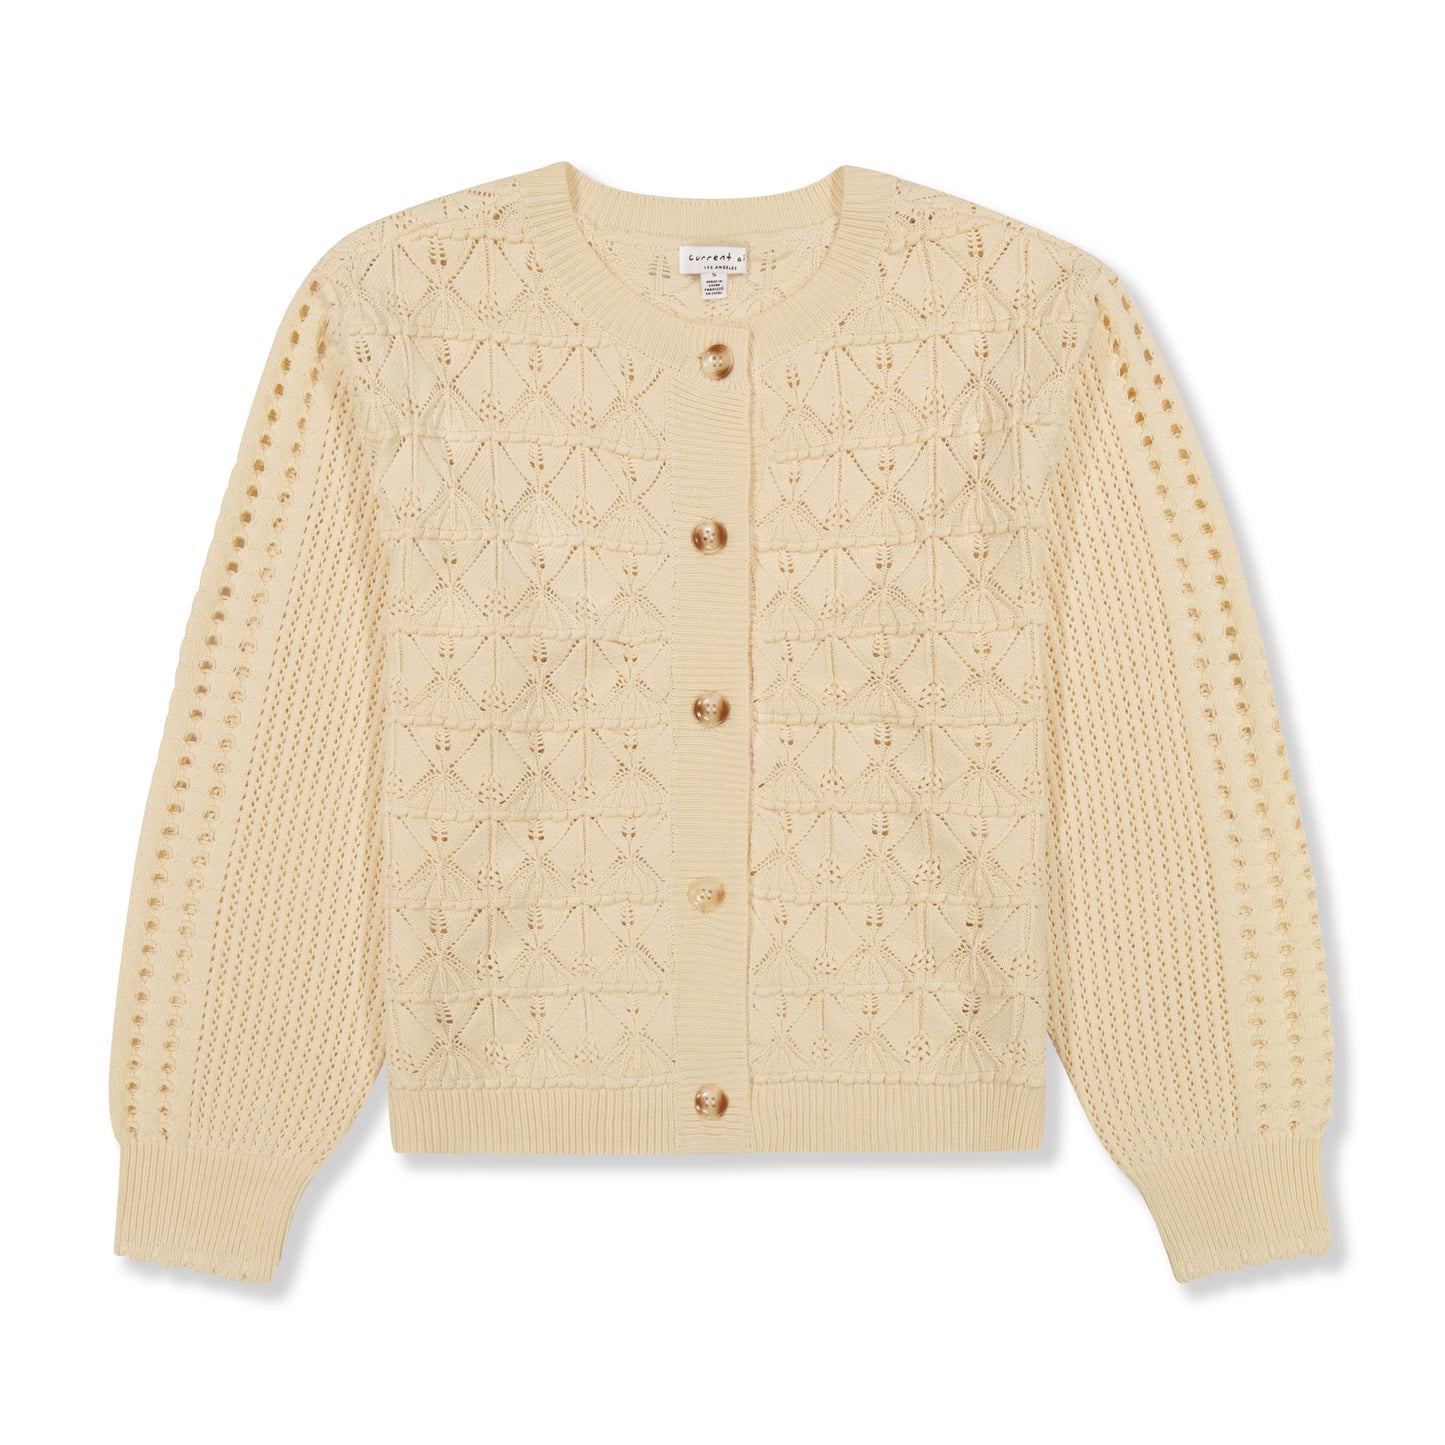 Ivory Crochet Sweater cardigan